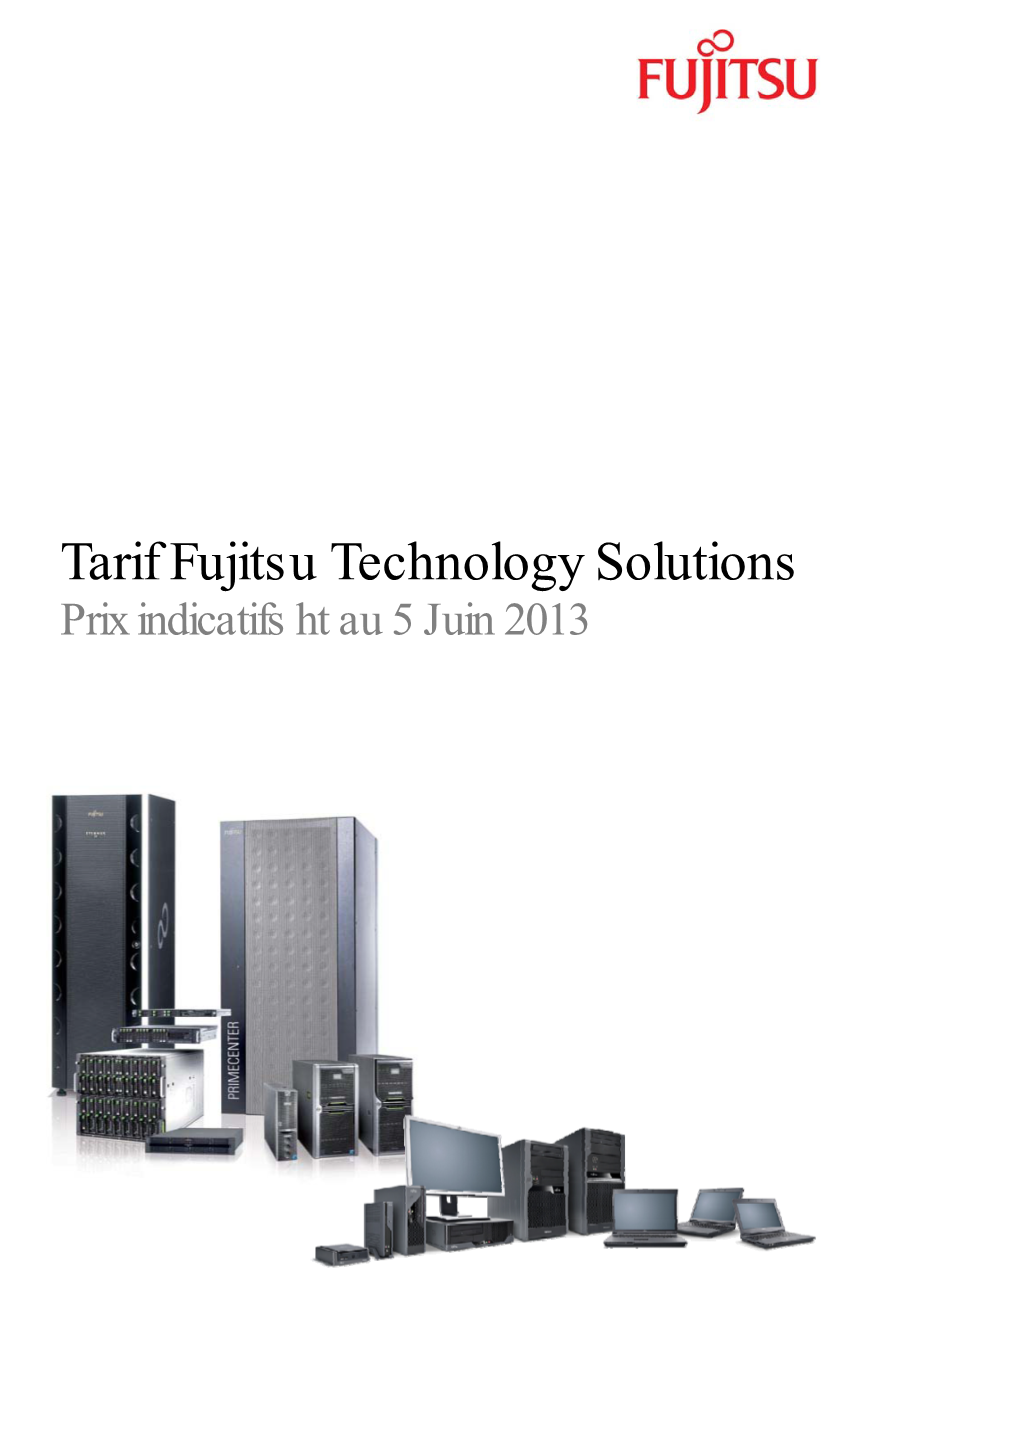 Tarif Fujitsu Technology Systems France